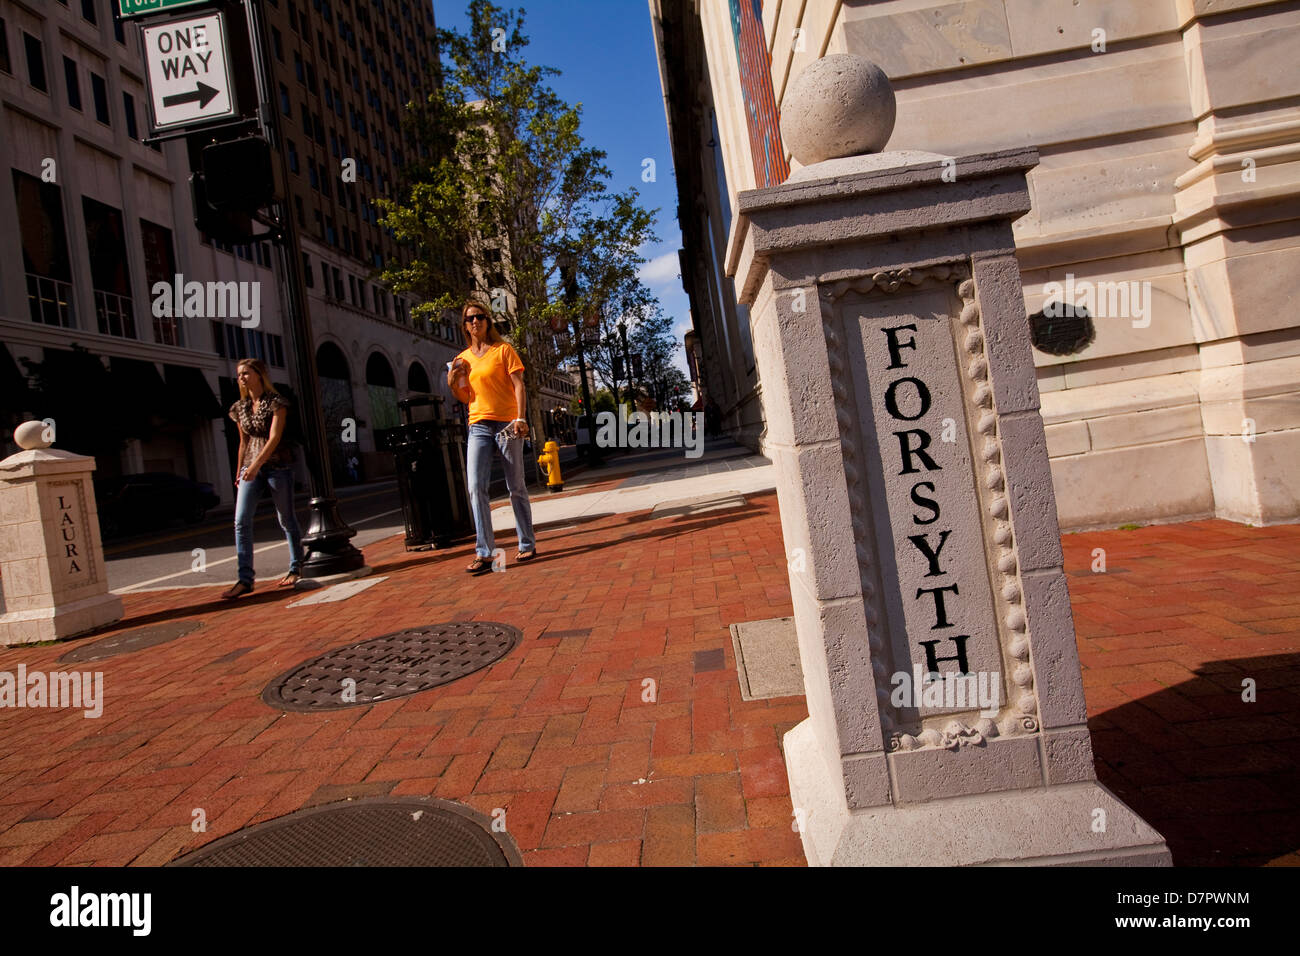 Forsyth street is seen in Jacksonville, Florida Stock Photo